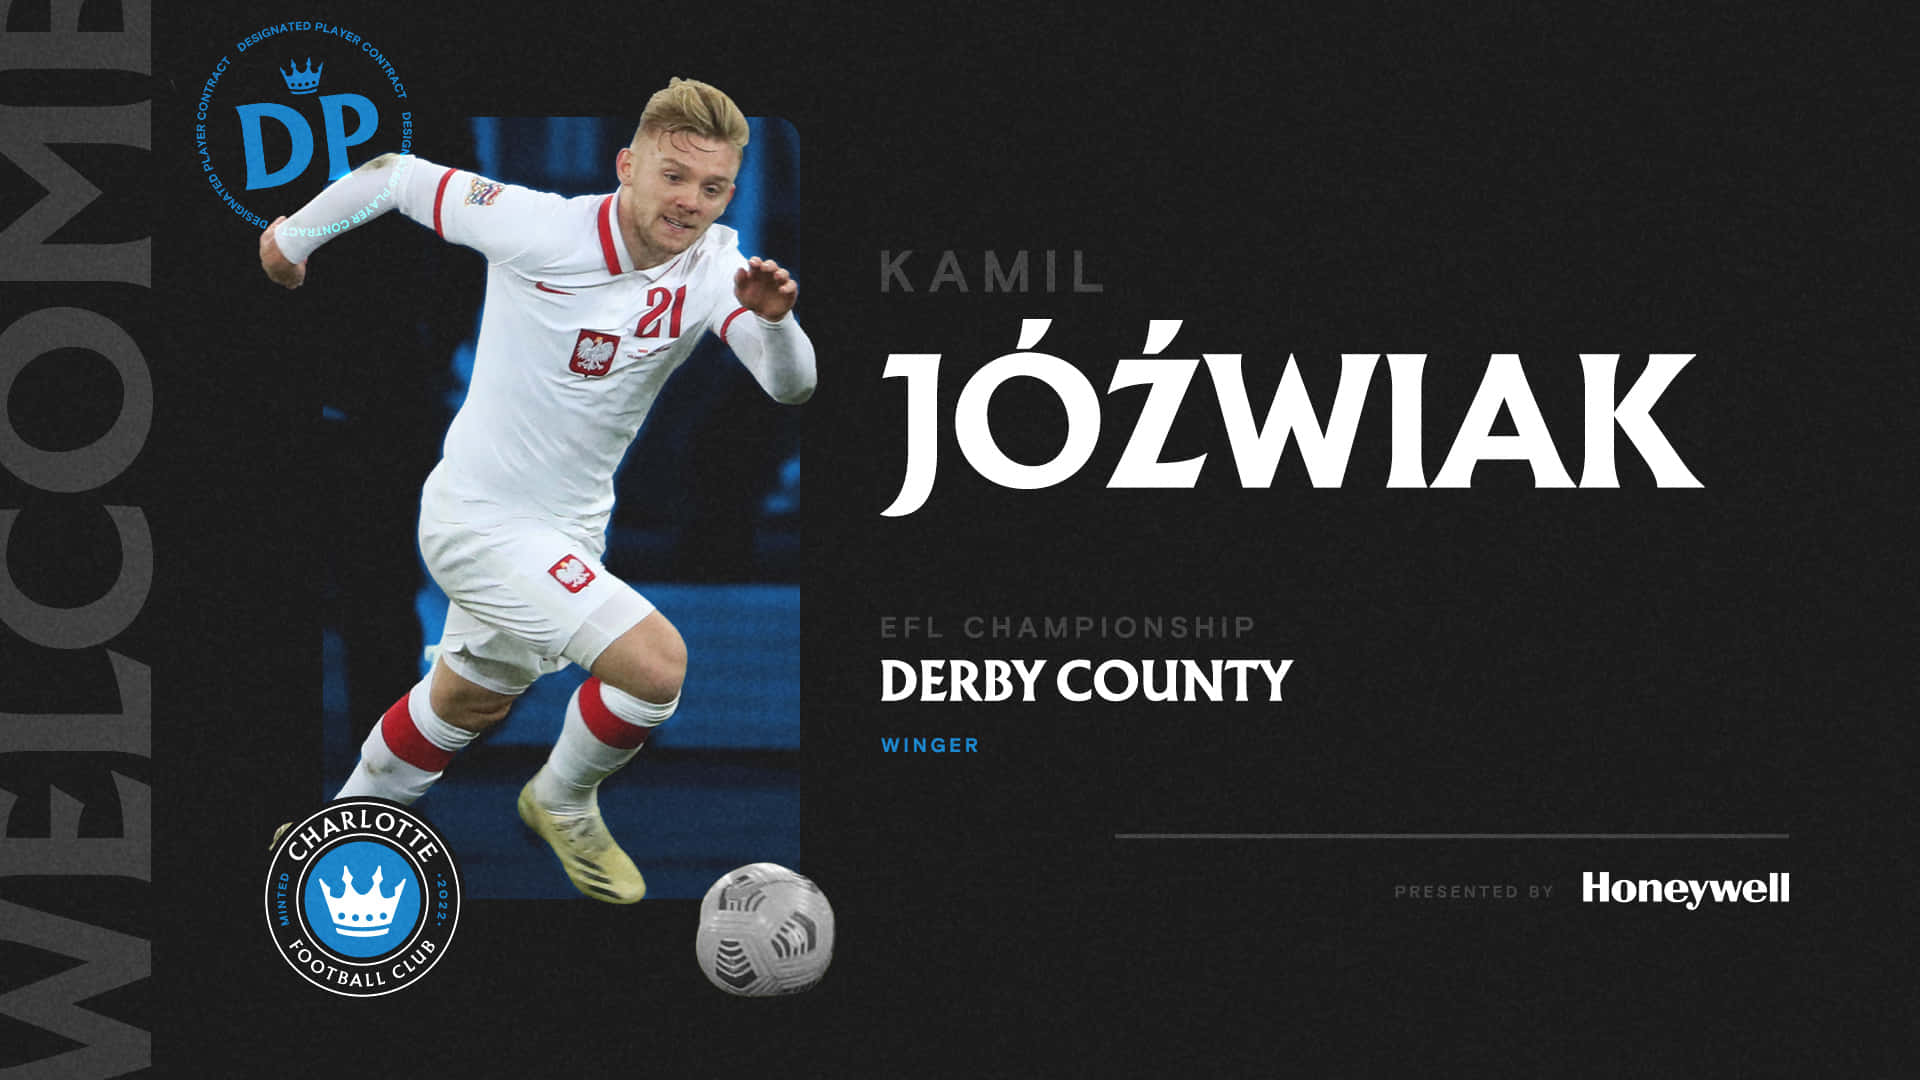 Derby County Kamil Jozwiak Welcome Poster Wallpaper